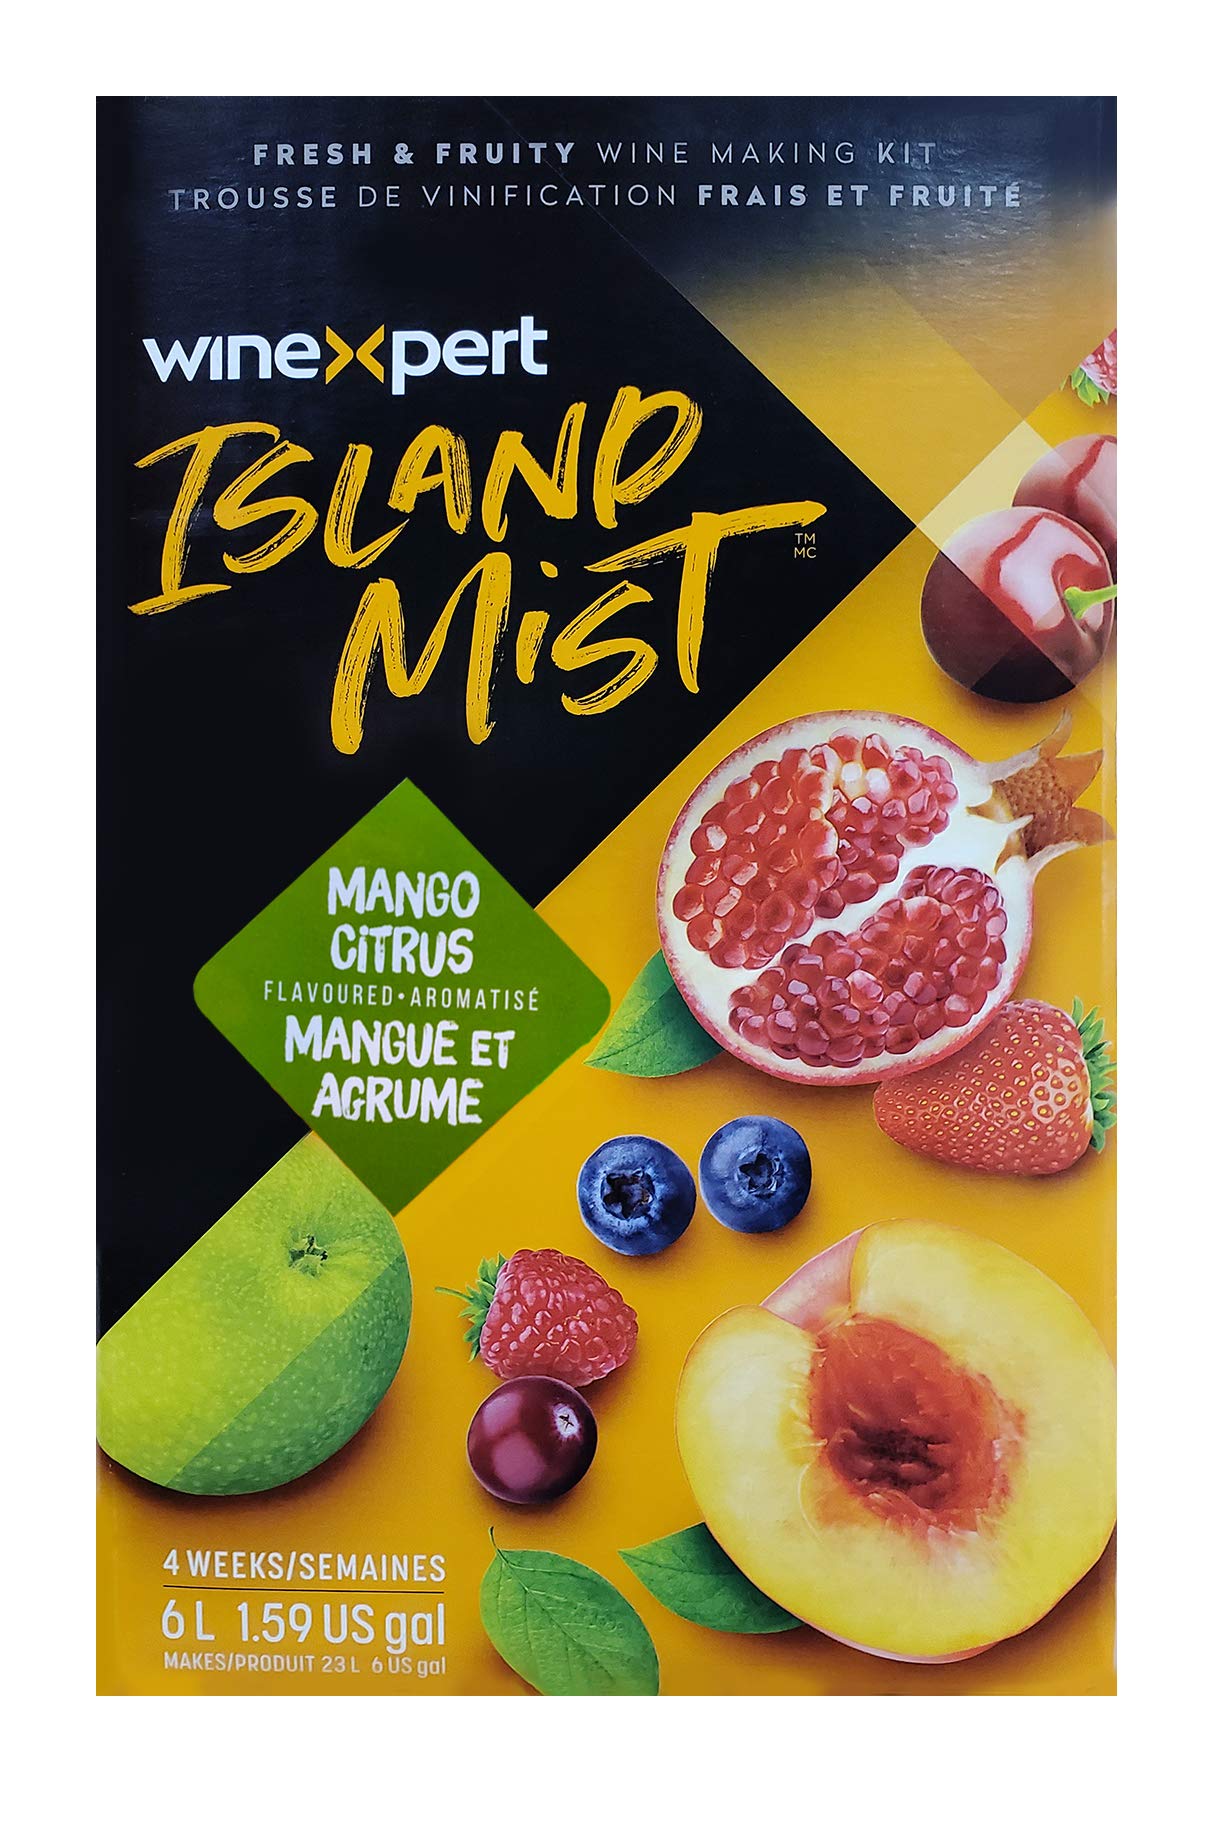 Island Mist Wine Kits